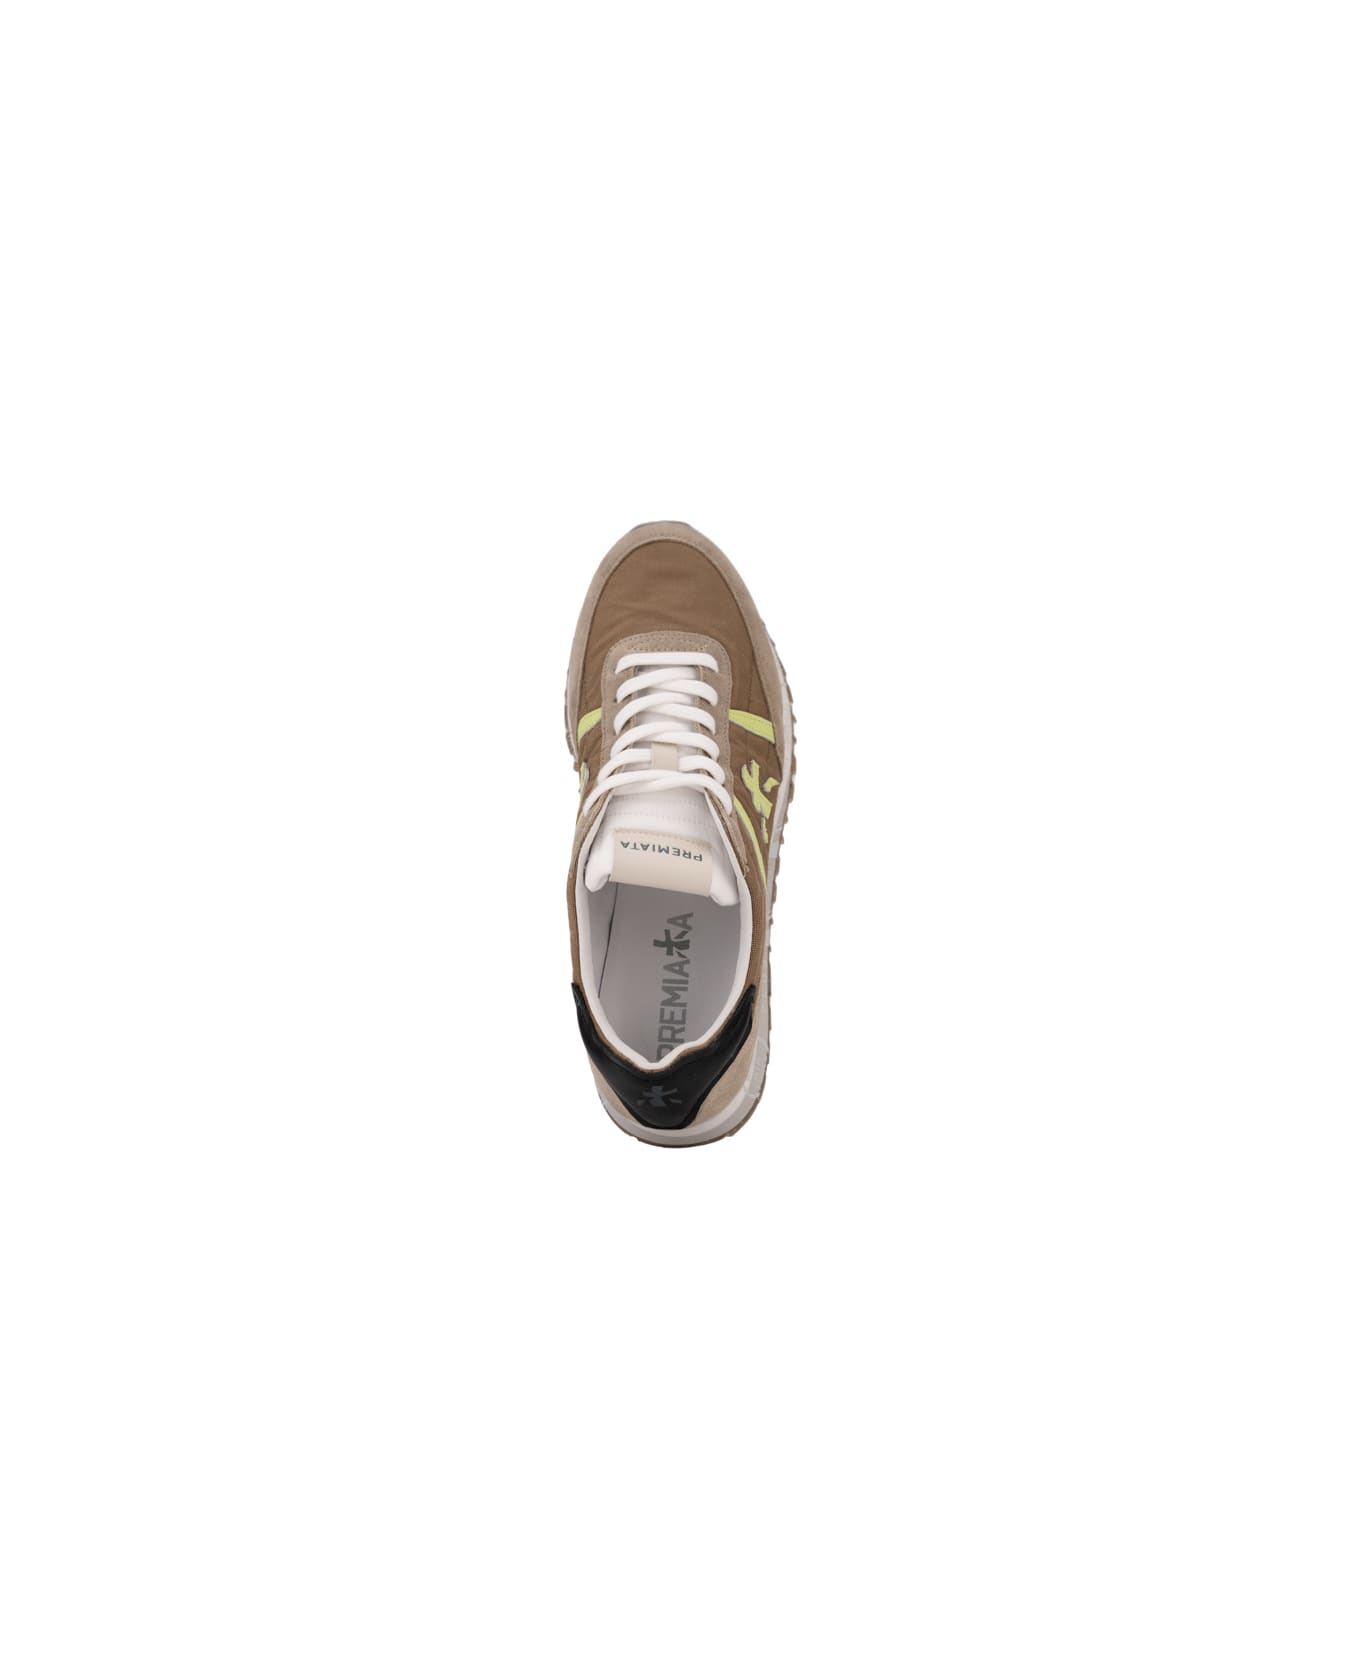 Premiata Sean 6639 Sneakers - Marrone スニーカー